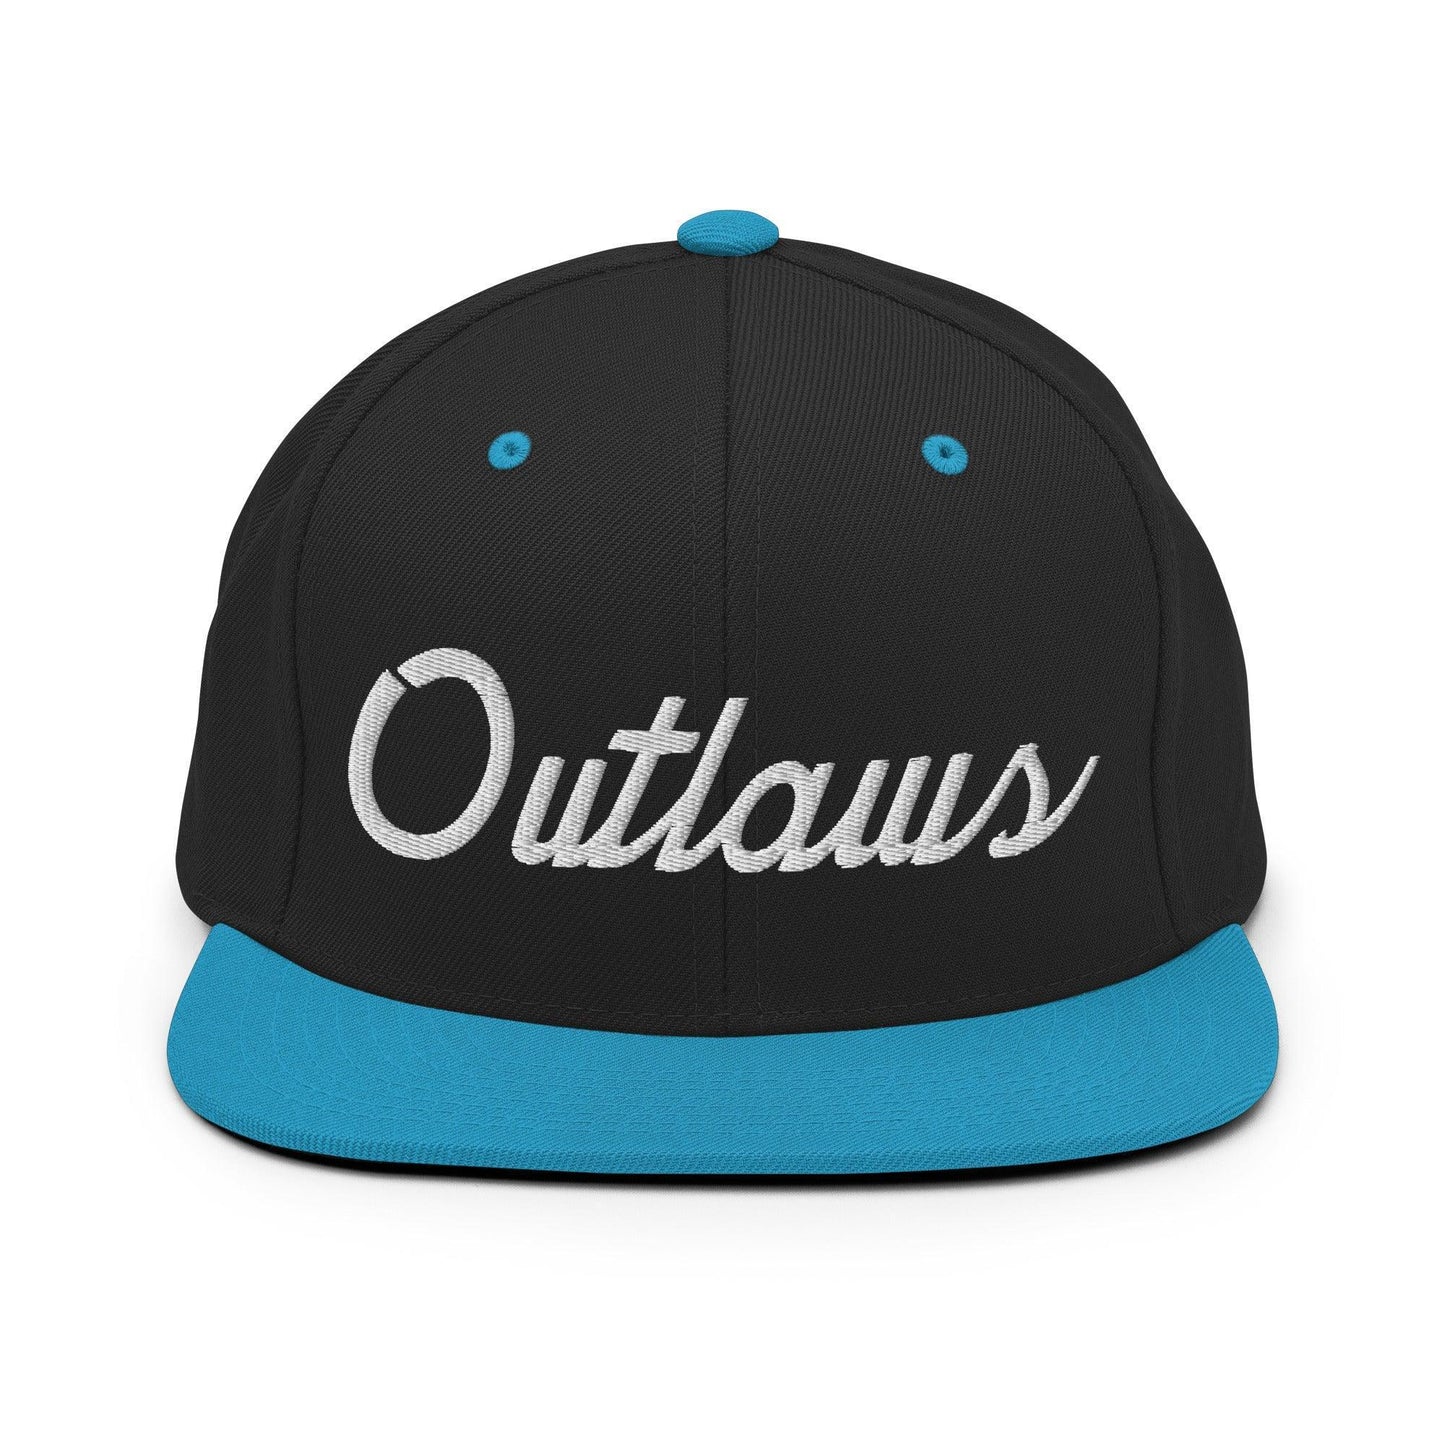 Outlaws School Mascot Script Snapback Hat Black Teal